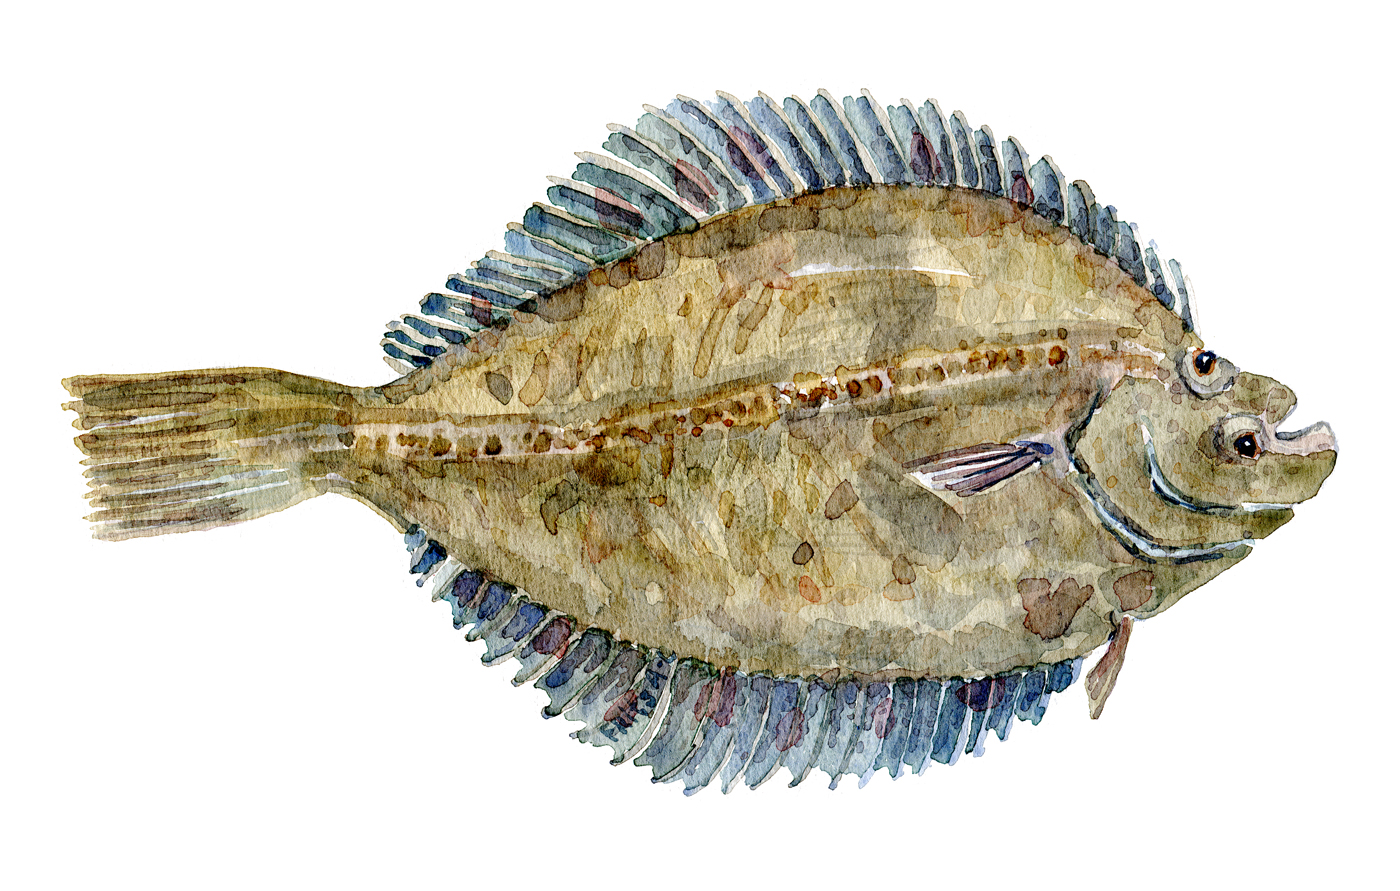 Watercolor of freshwaterfish, by Frits Ahlefeldt - Skruppe Dansk Ferskvandsfisk